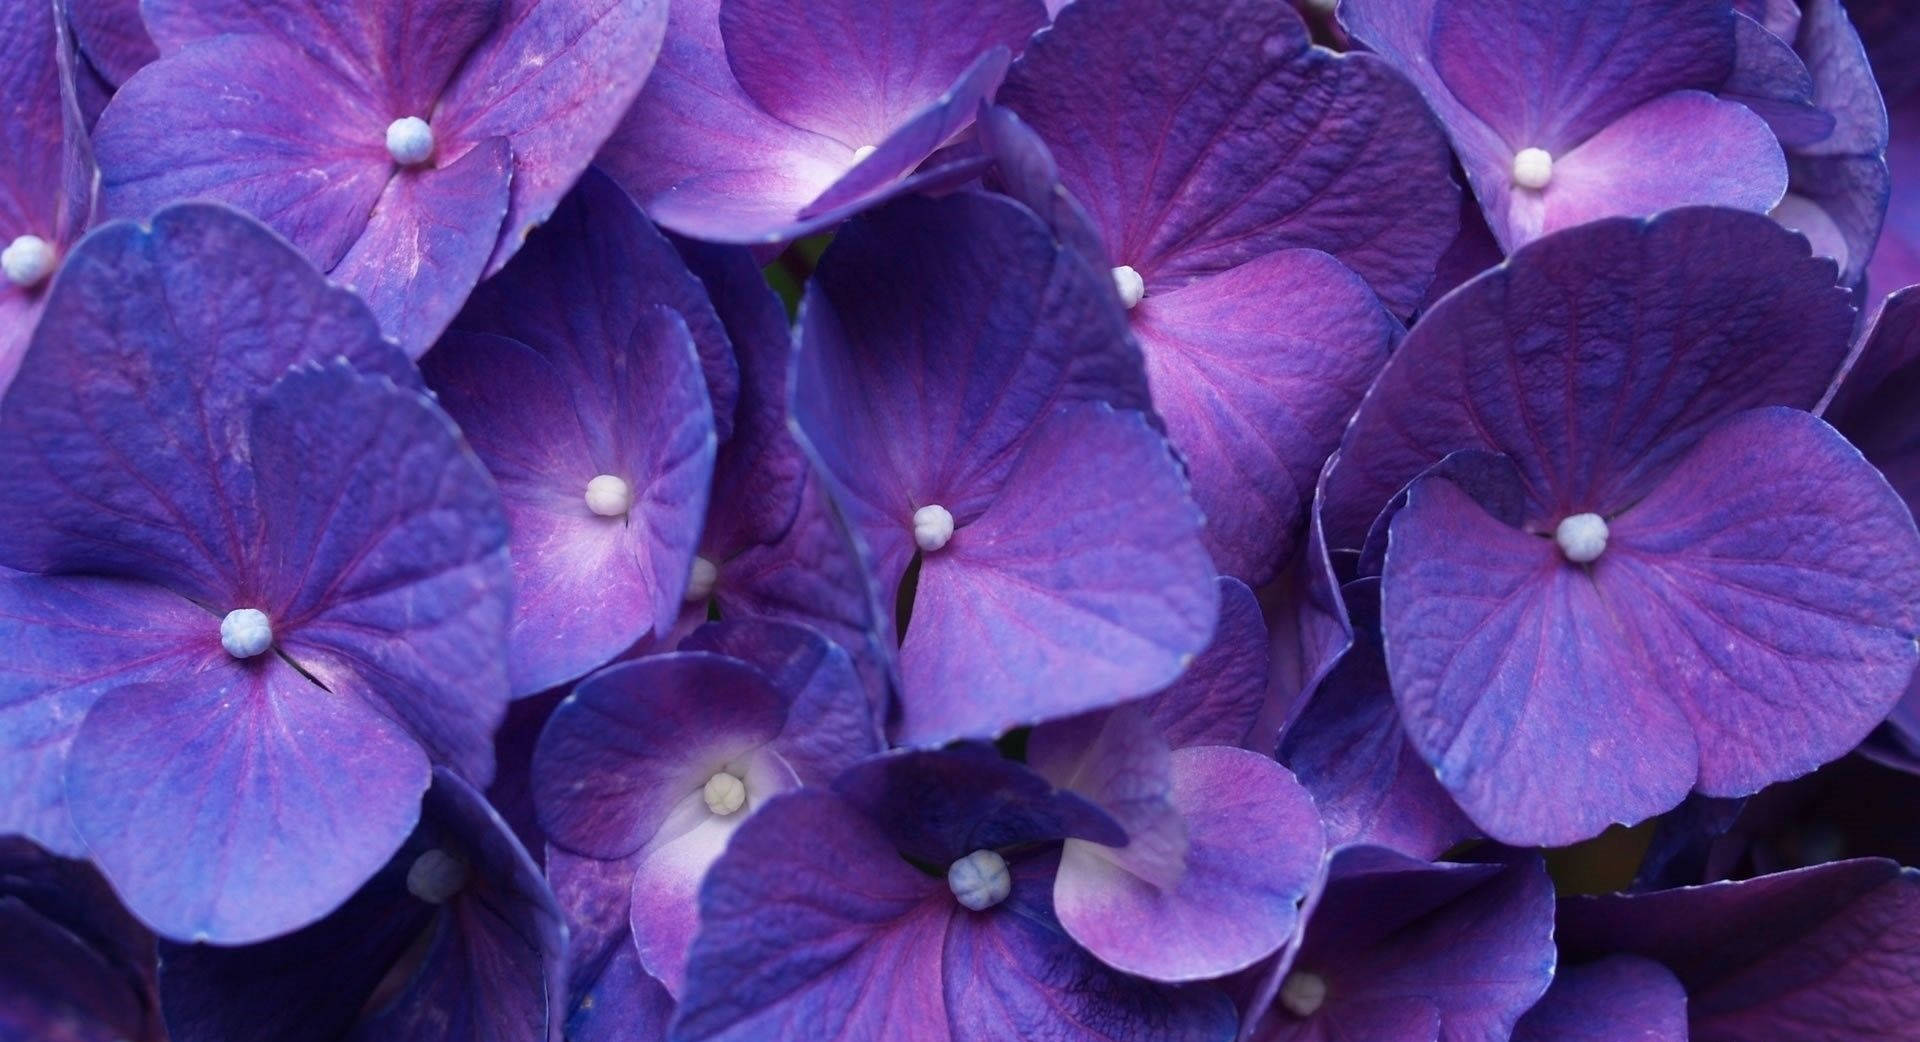 Caption: "Exquisite Purple Hydrangea Blooms" Wallpaper